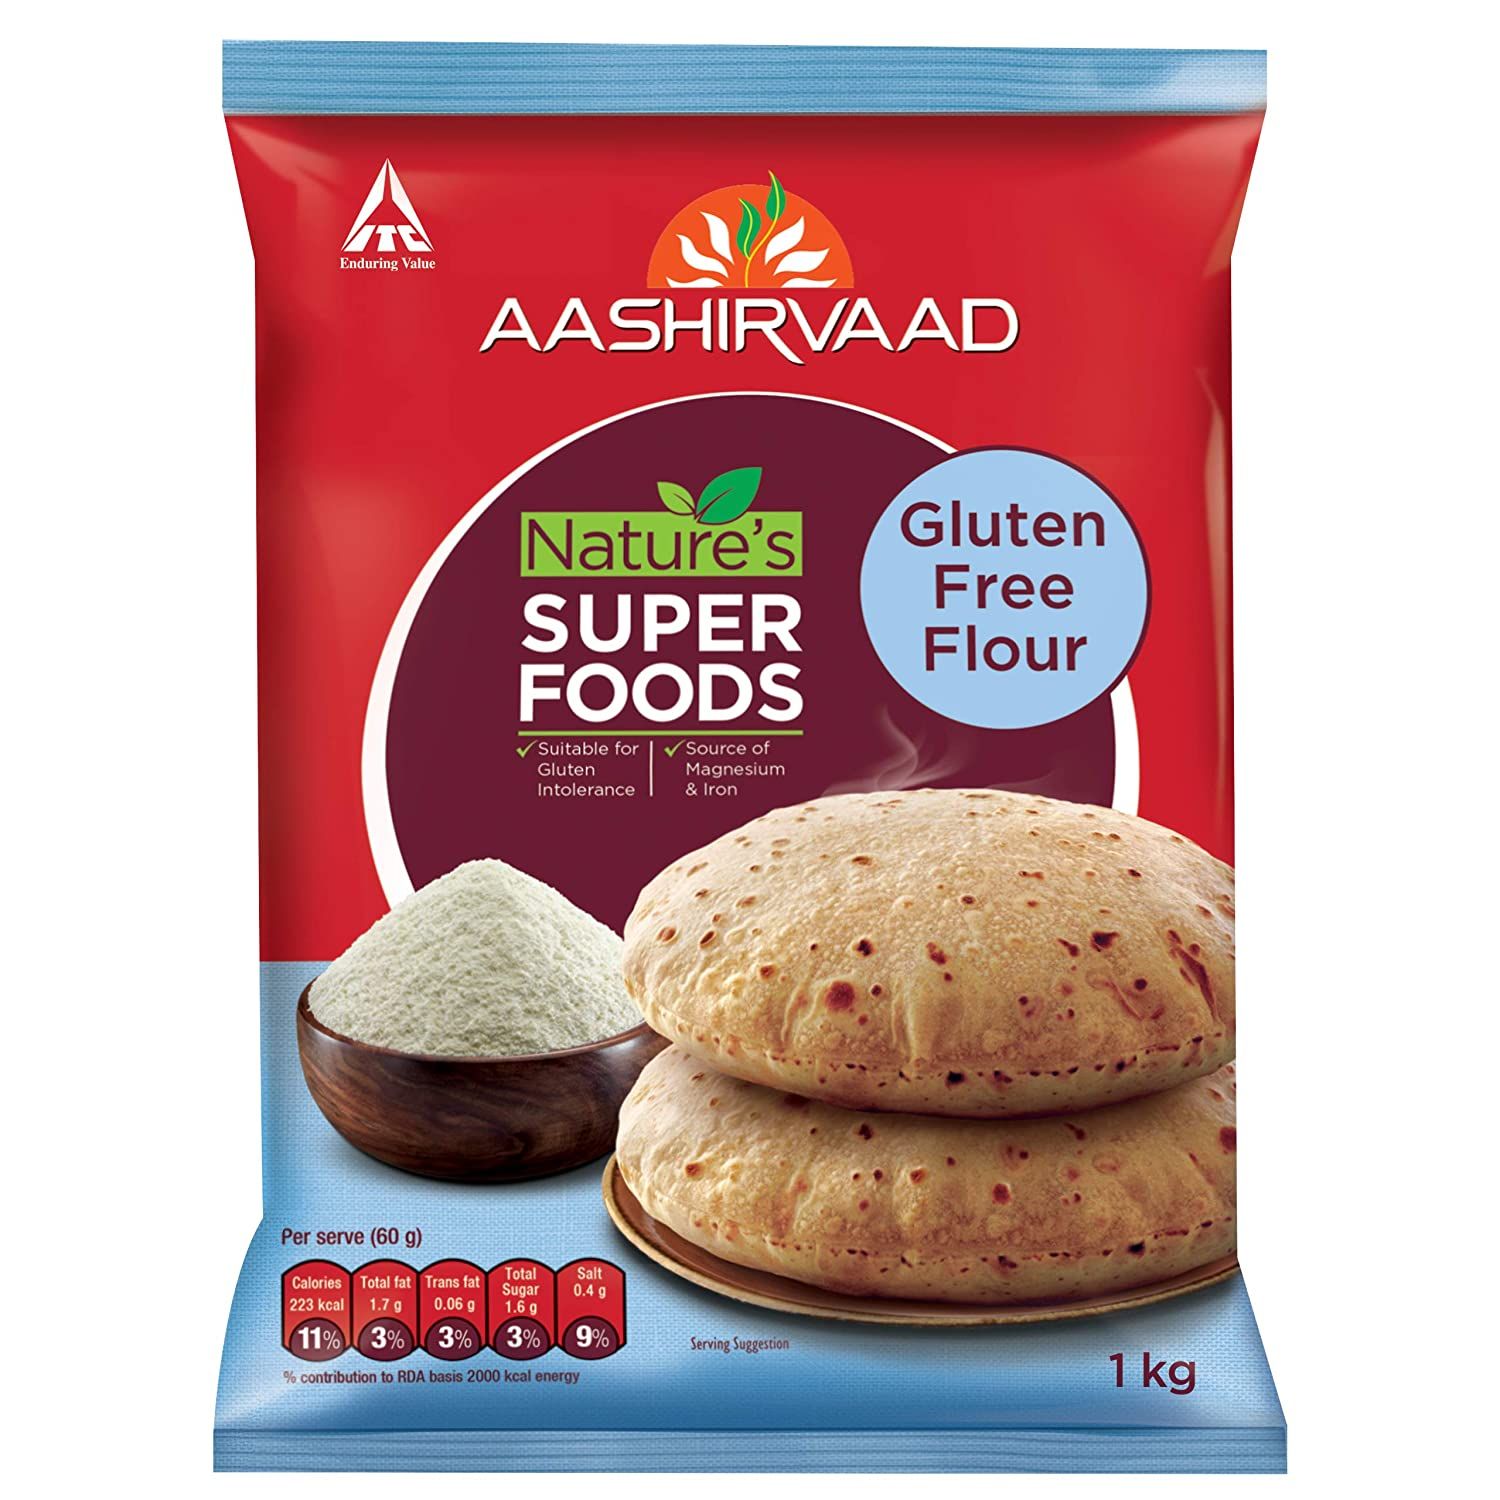 Aashirvaad Nature's Super Foods Gluten Free Flour Image